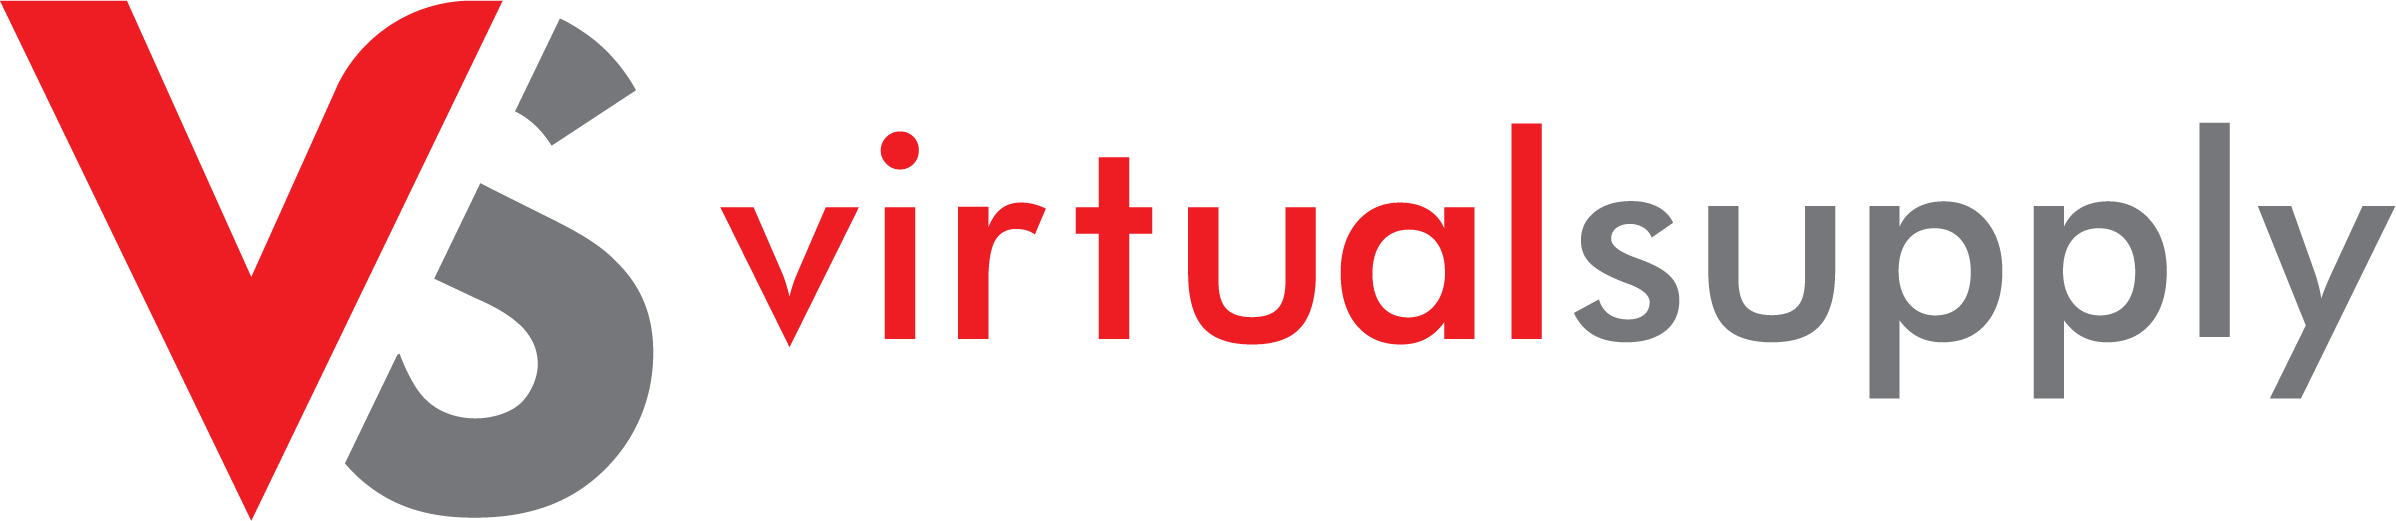 Virtual Supply logo